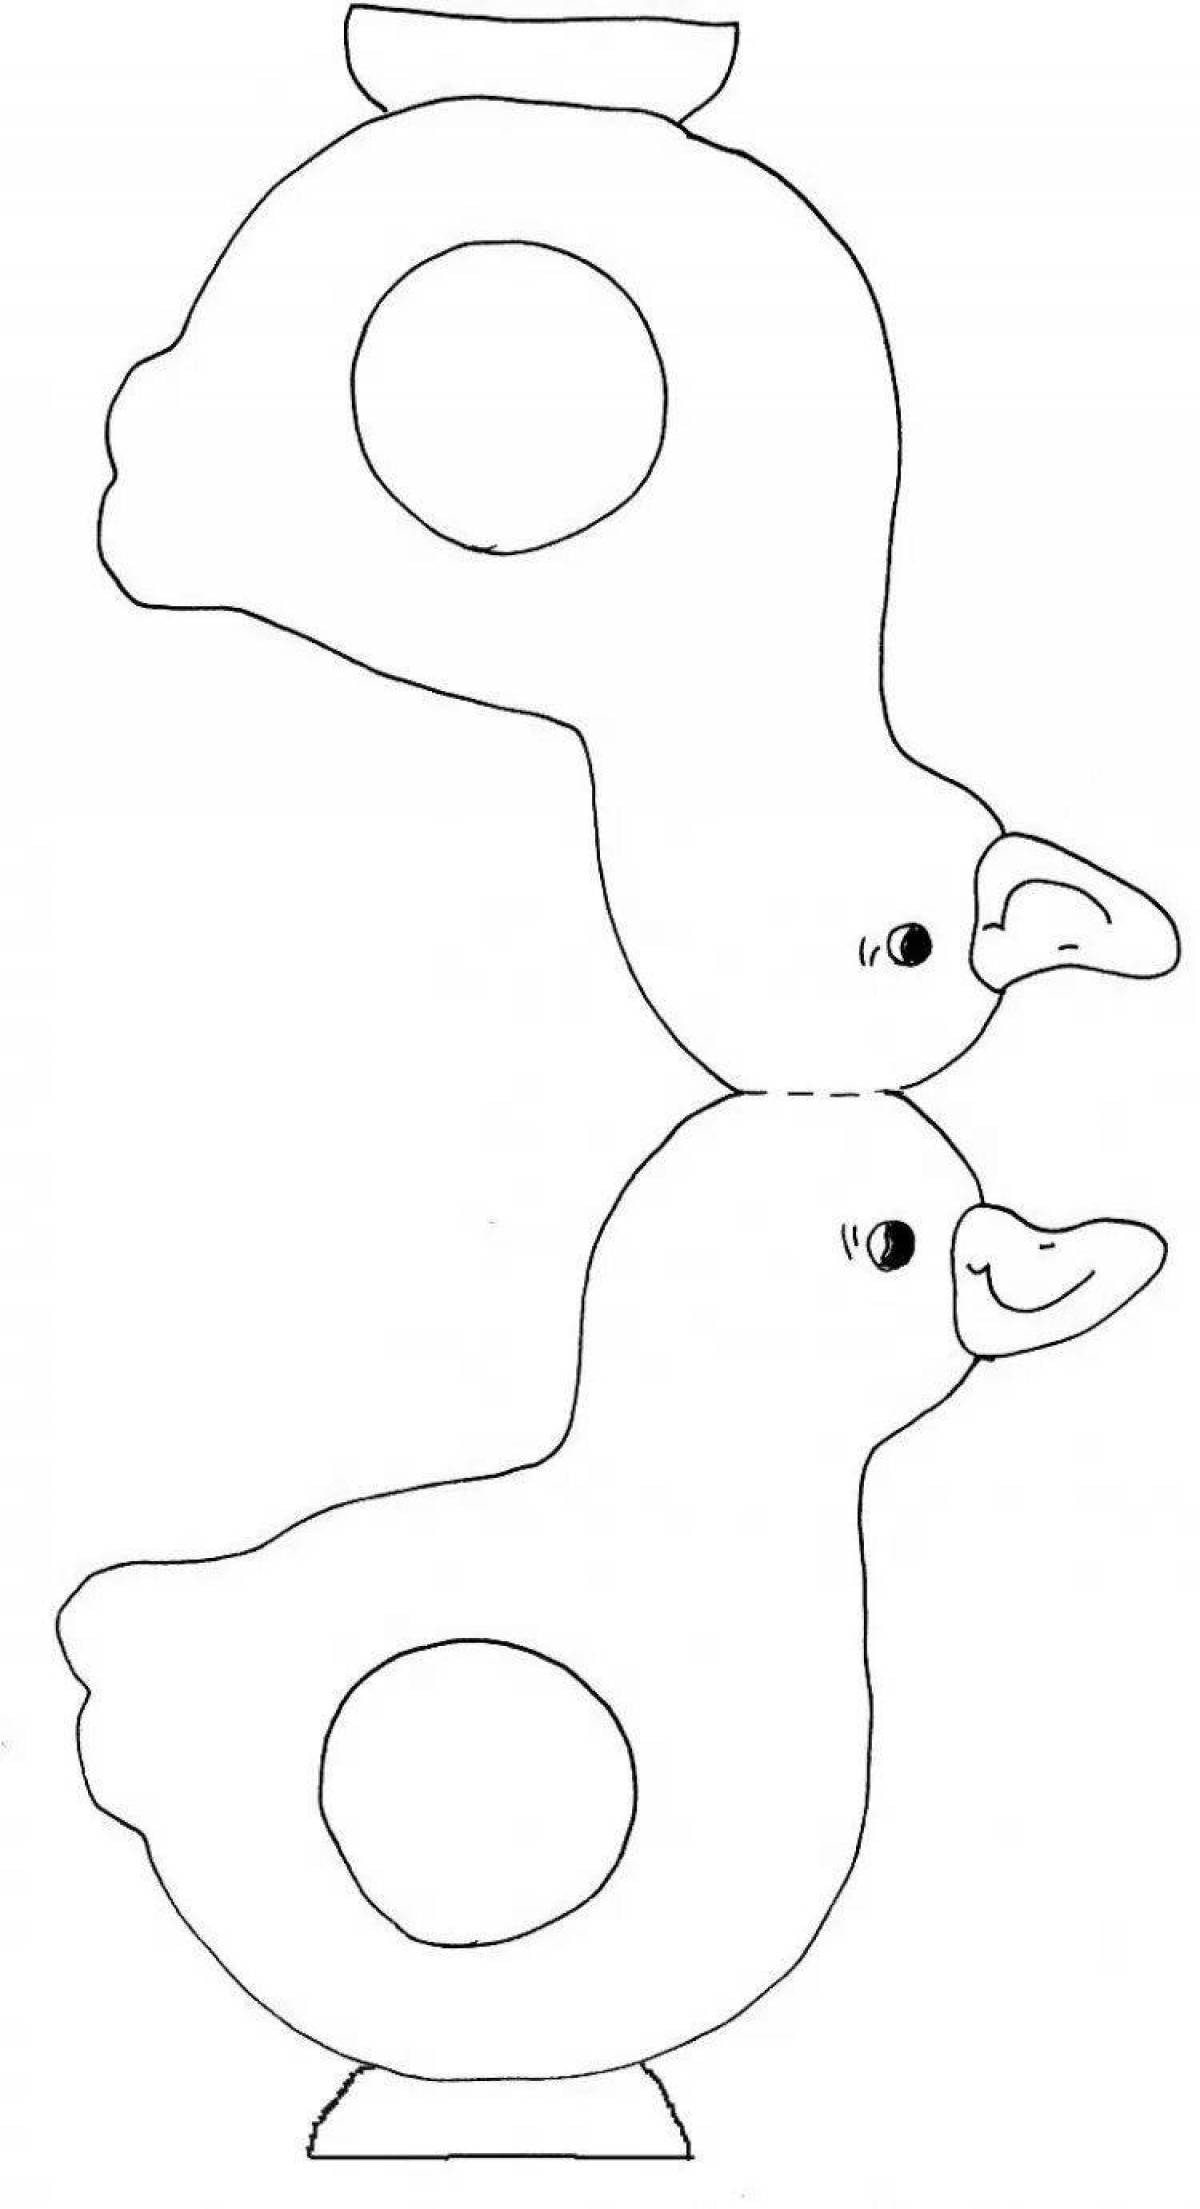 Красочная раскраска дымковская утка для детей младшего возраста